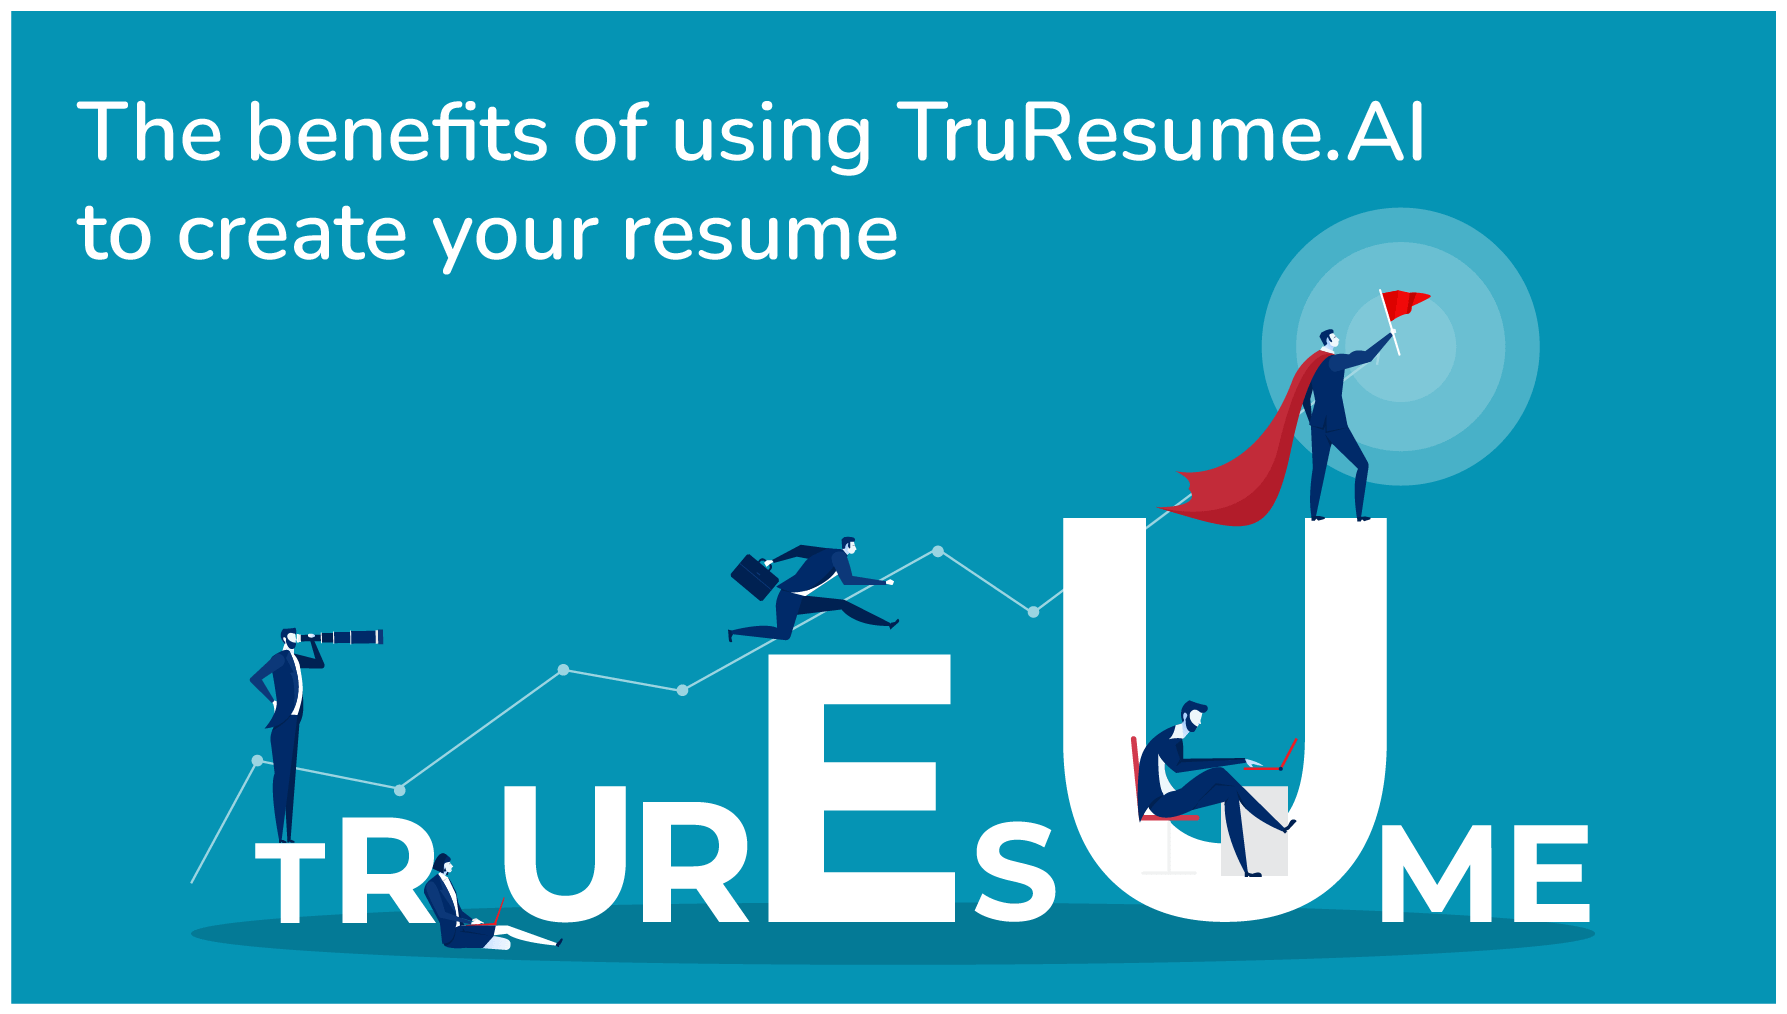 Create Your Resume with truresume.ai